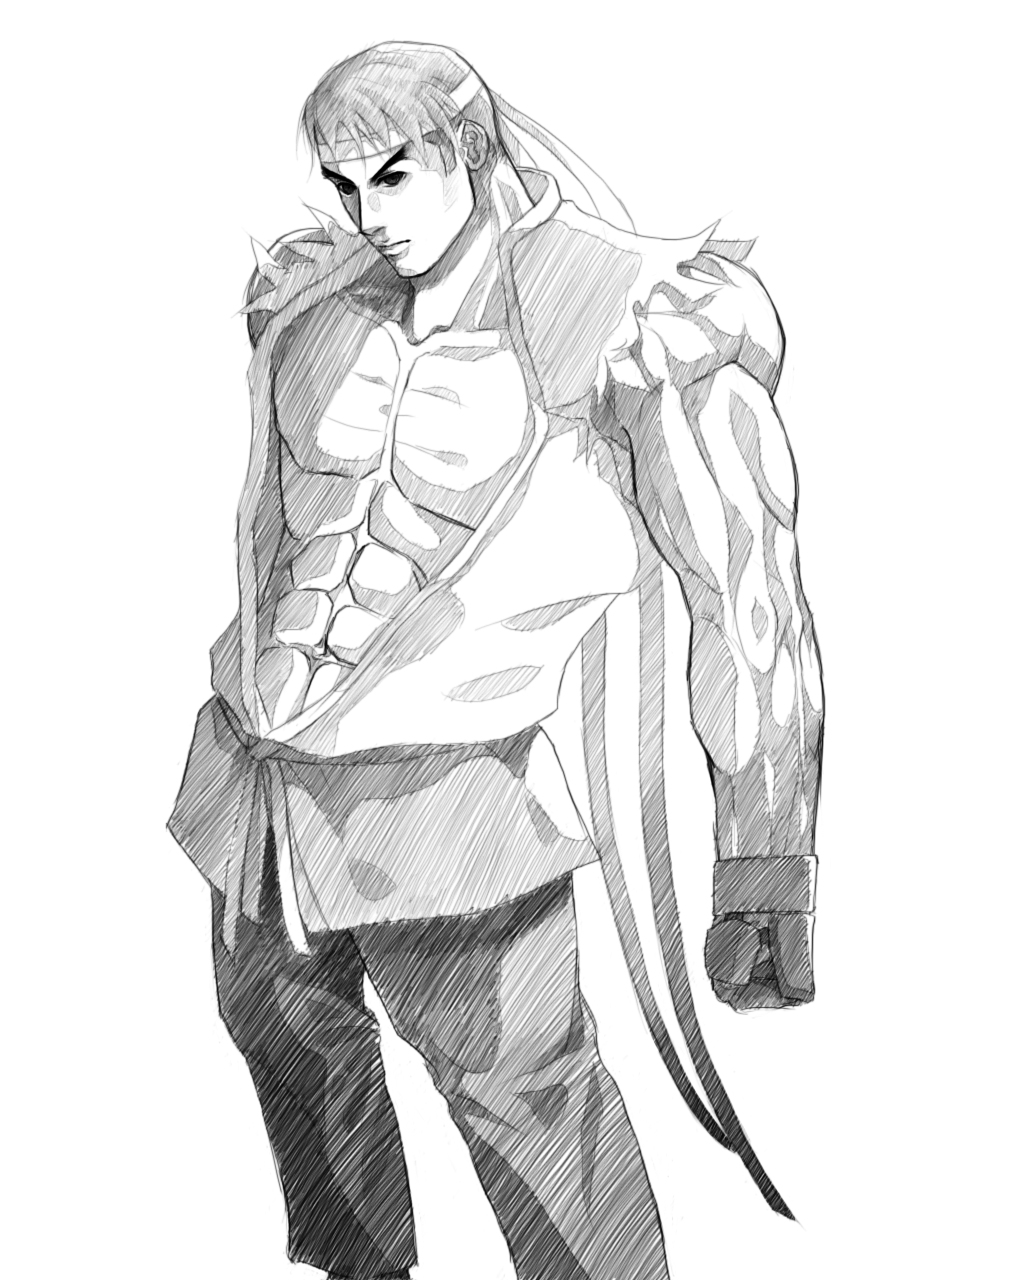 Ryu in Graphite by AngelusMortis